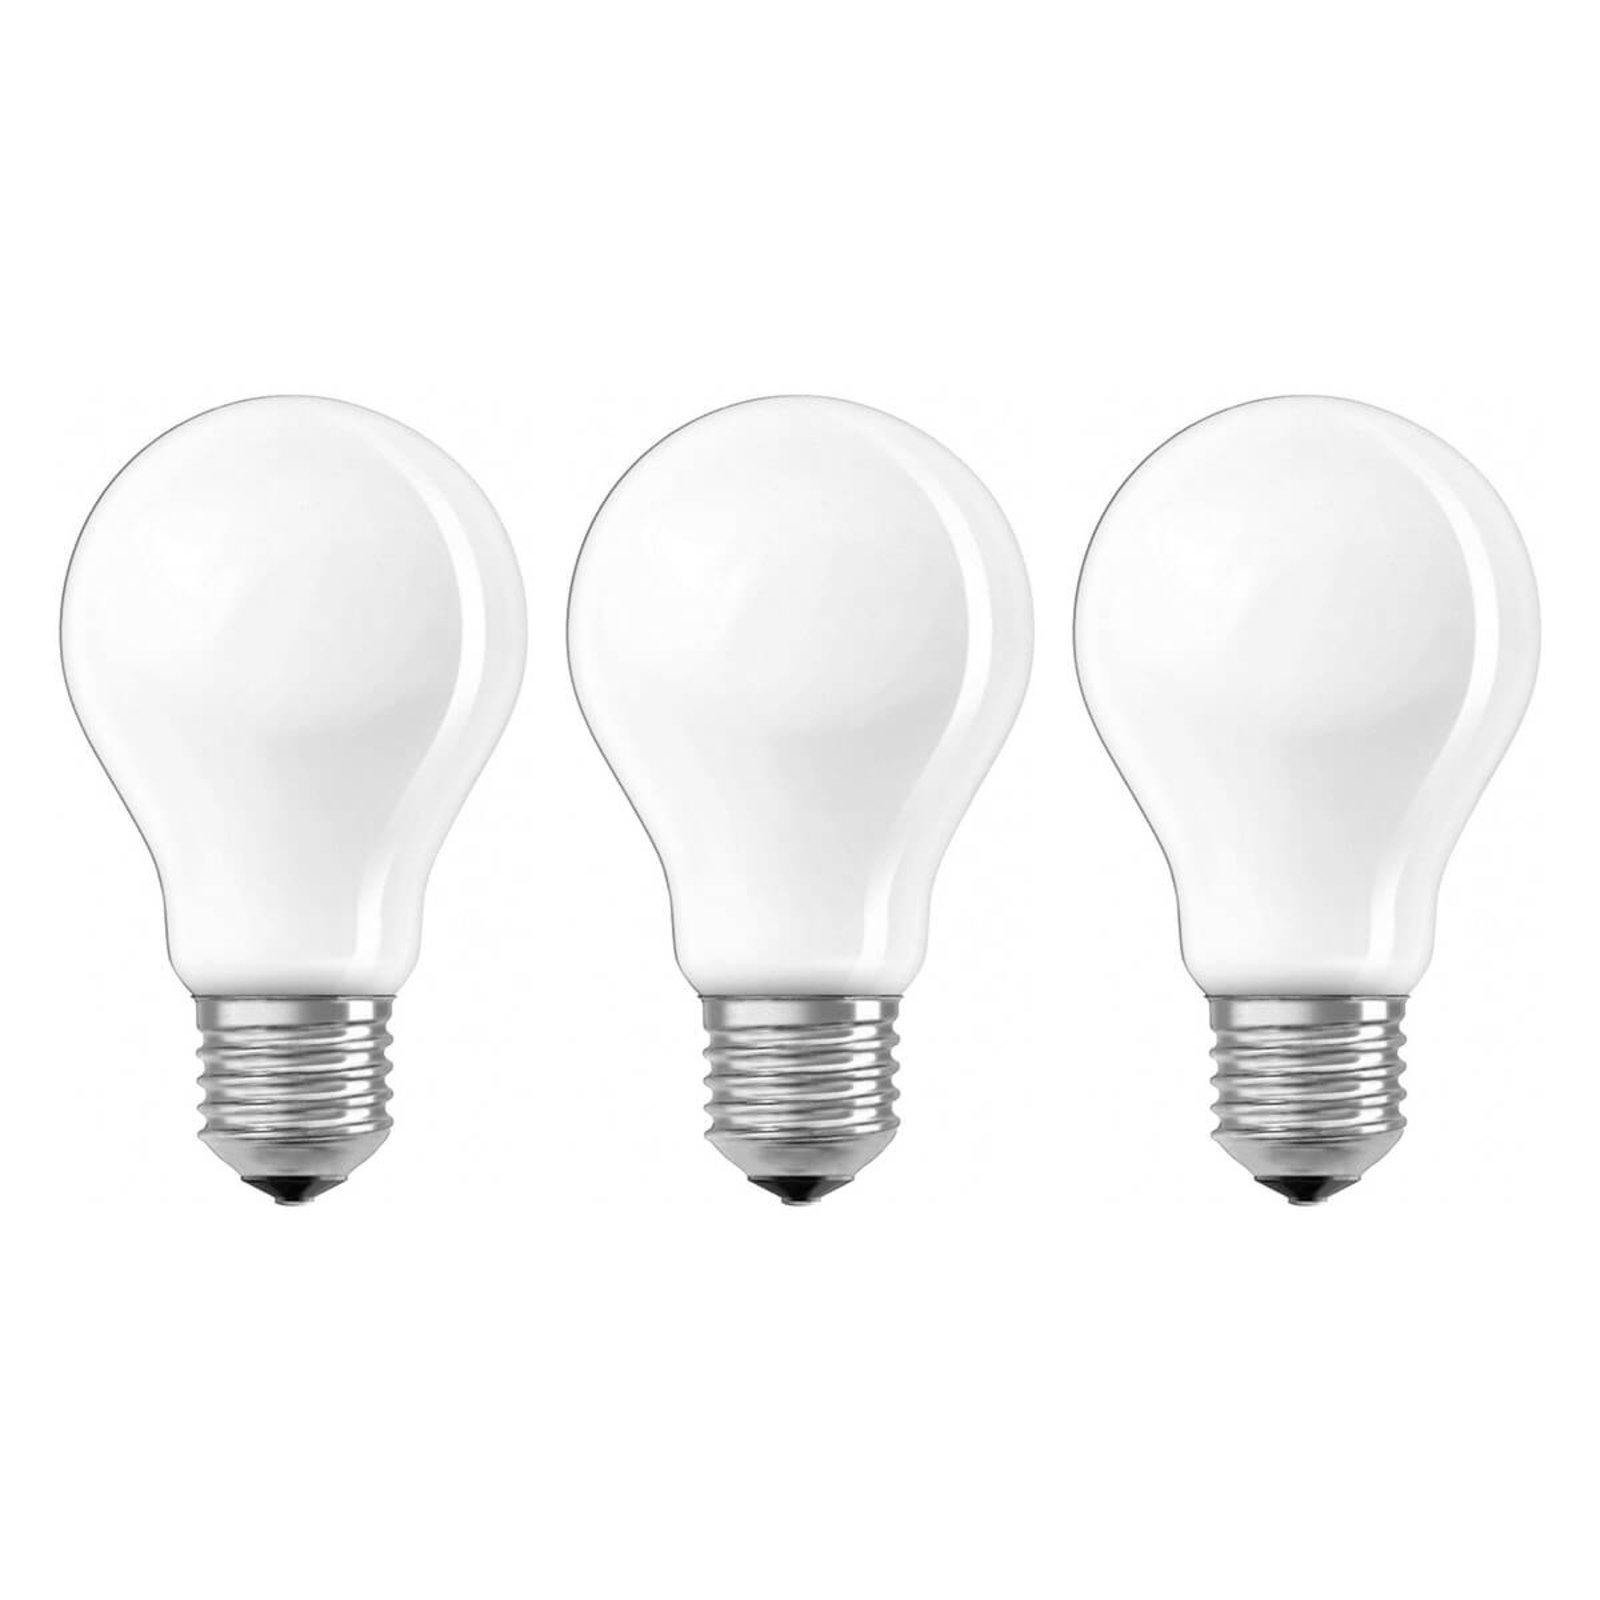 LED-Lampe E27 7W, 806 Lumen, 3er-Set